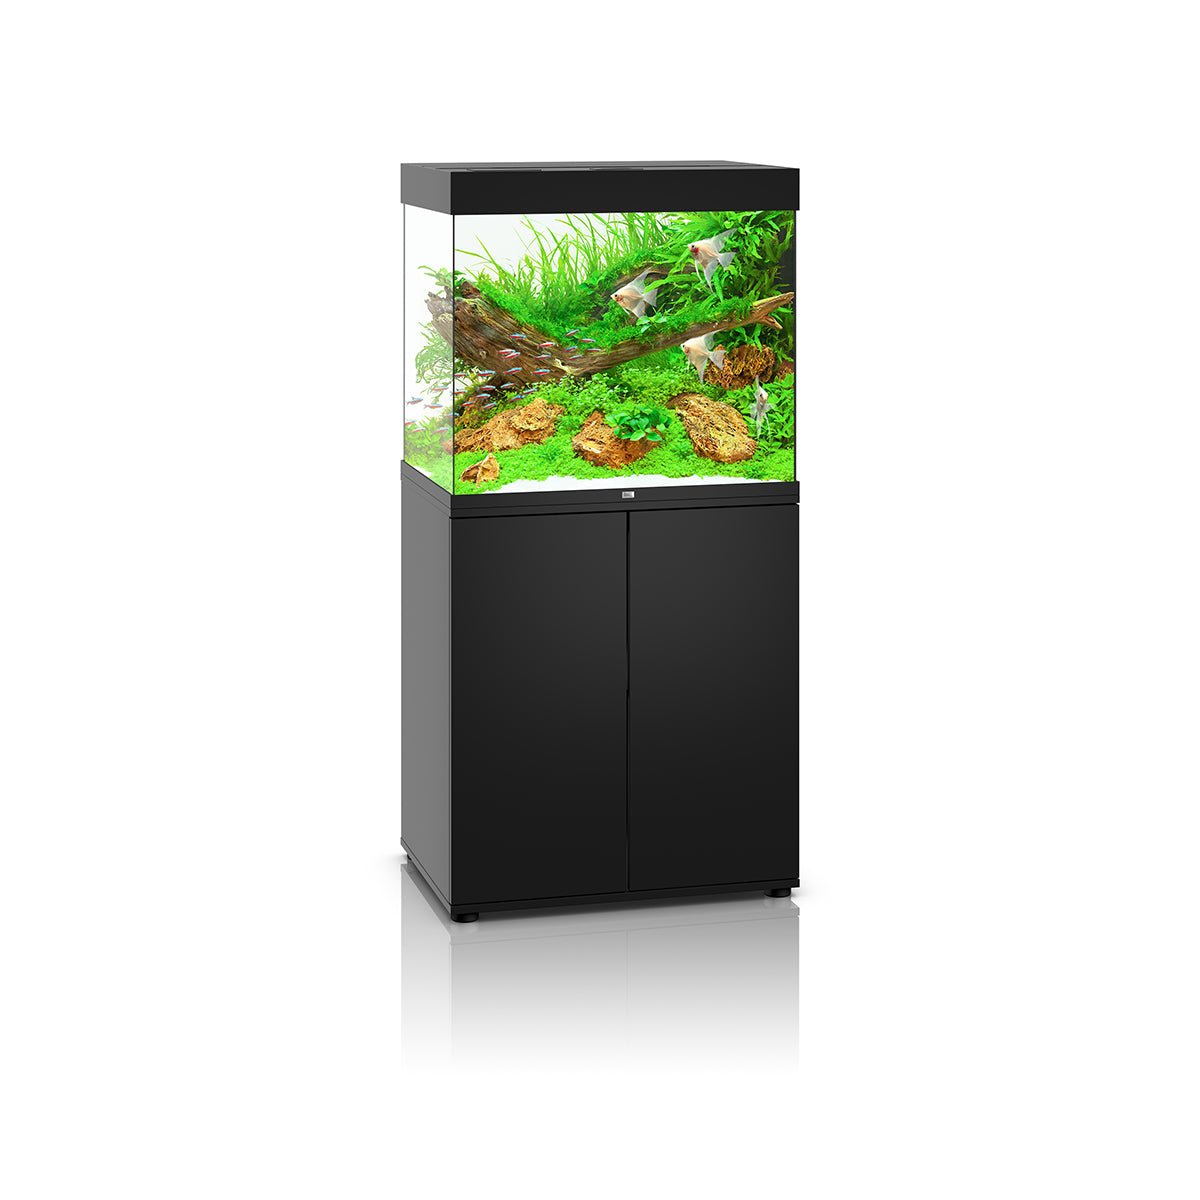 Juwel Lido 200 LED Aquarium and Cabinet (Black) - Charterhouse Aquatics